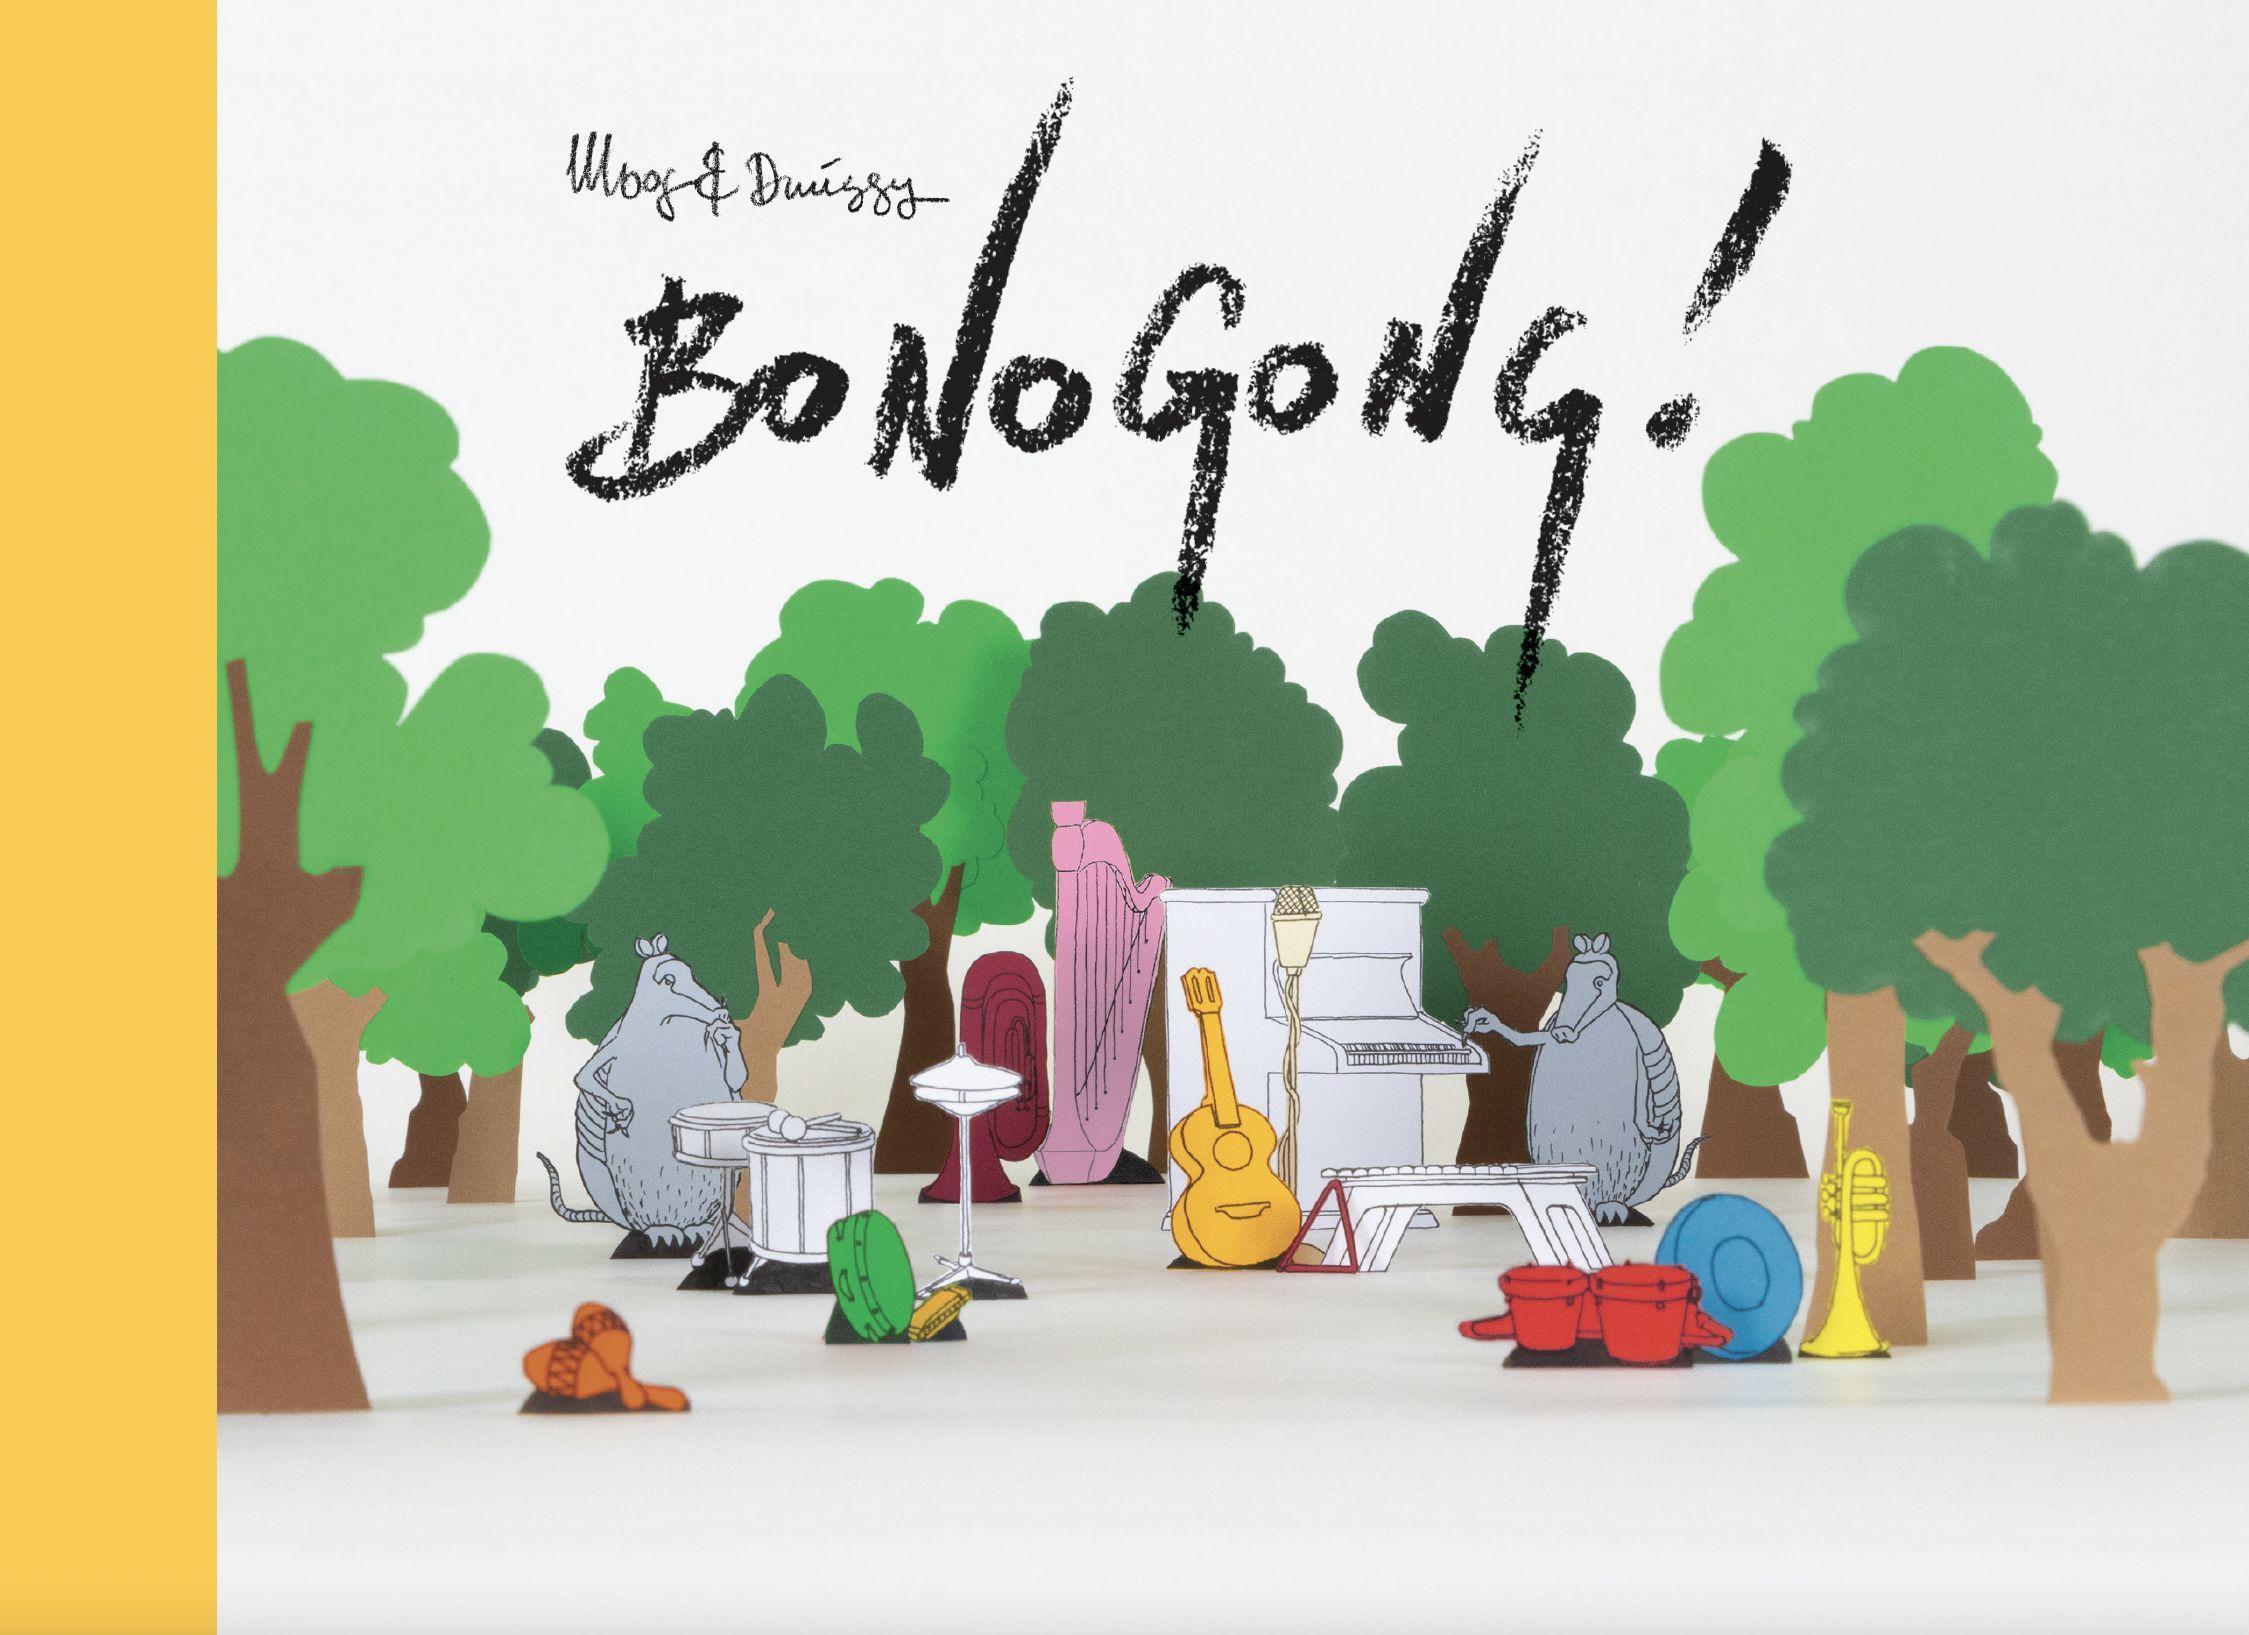 Bonogong! Moog